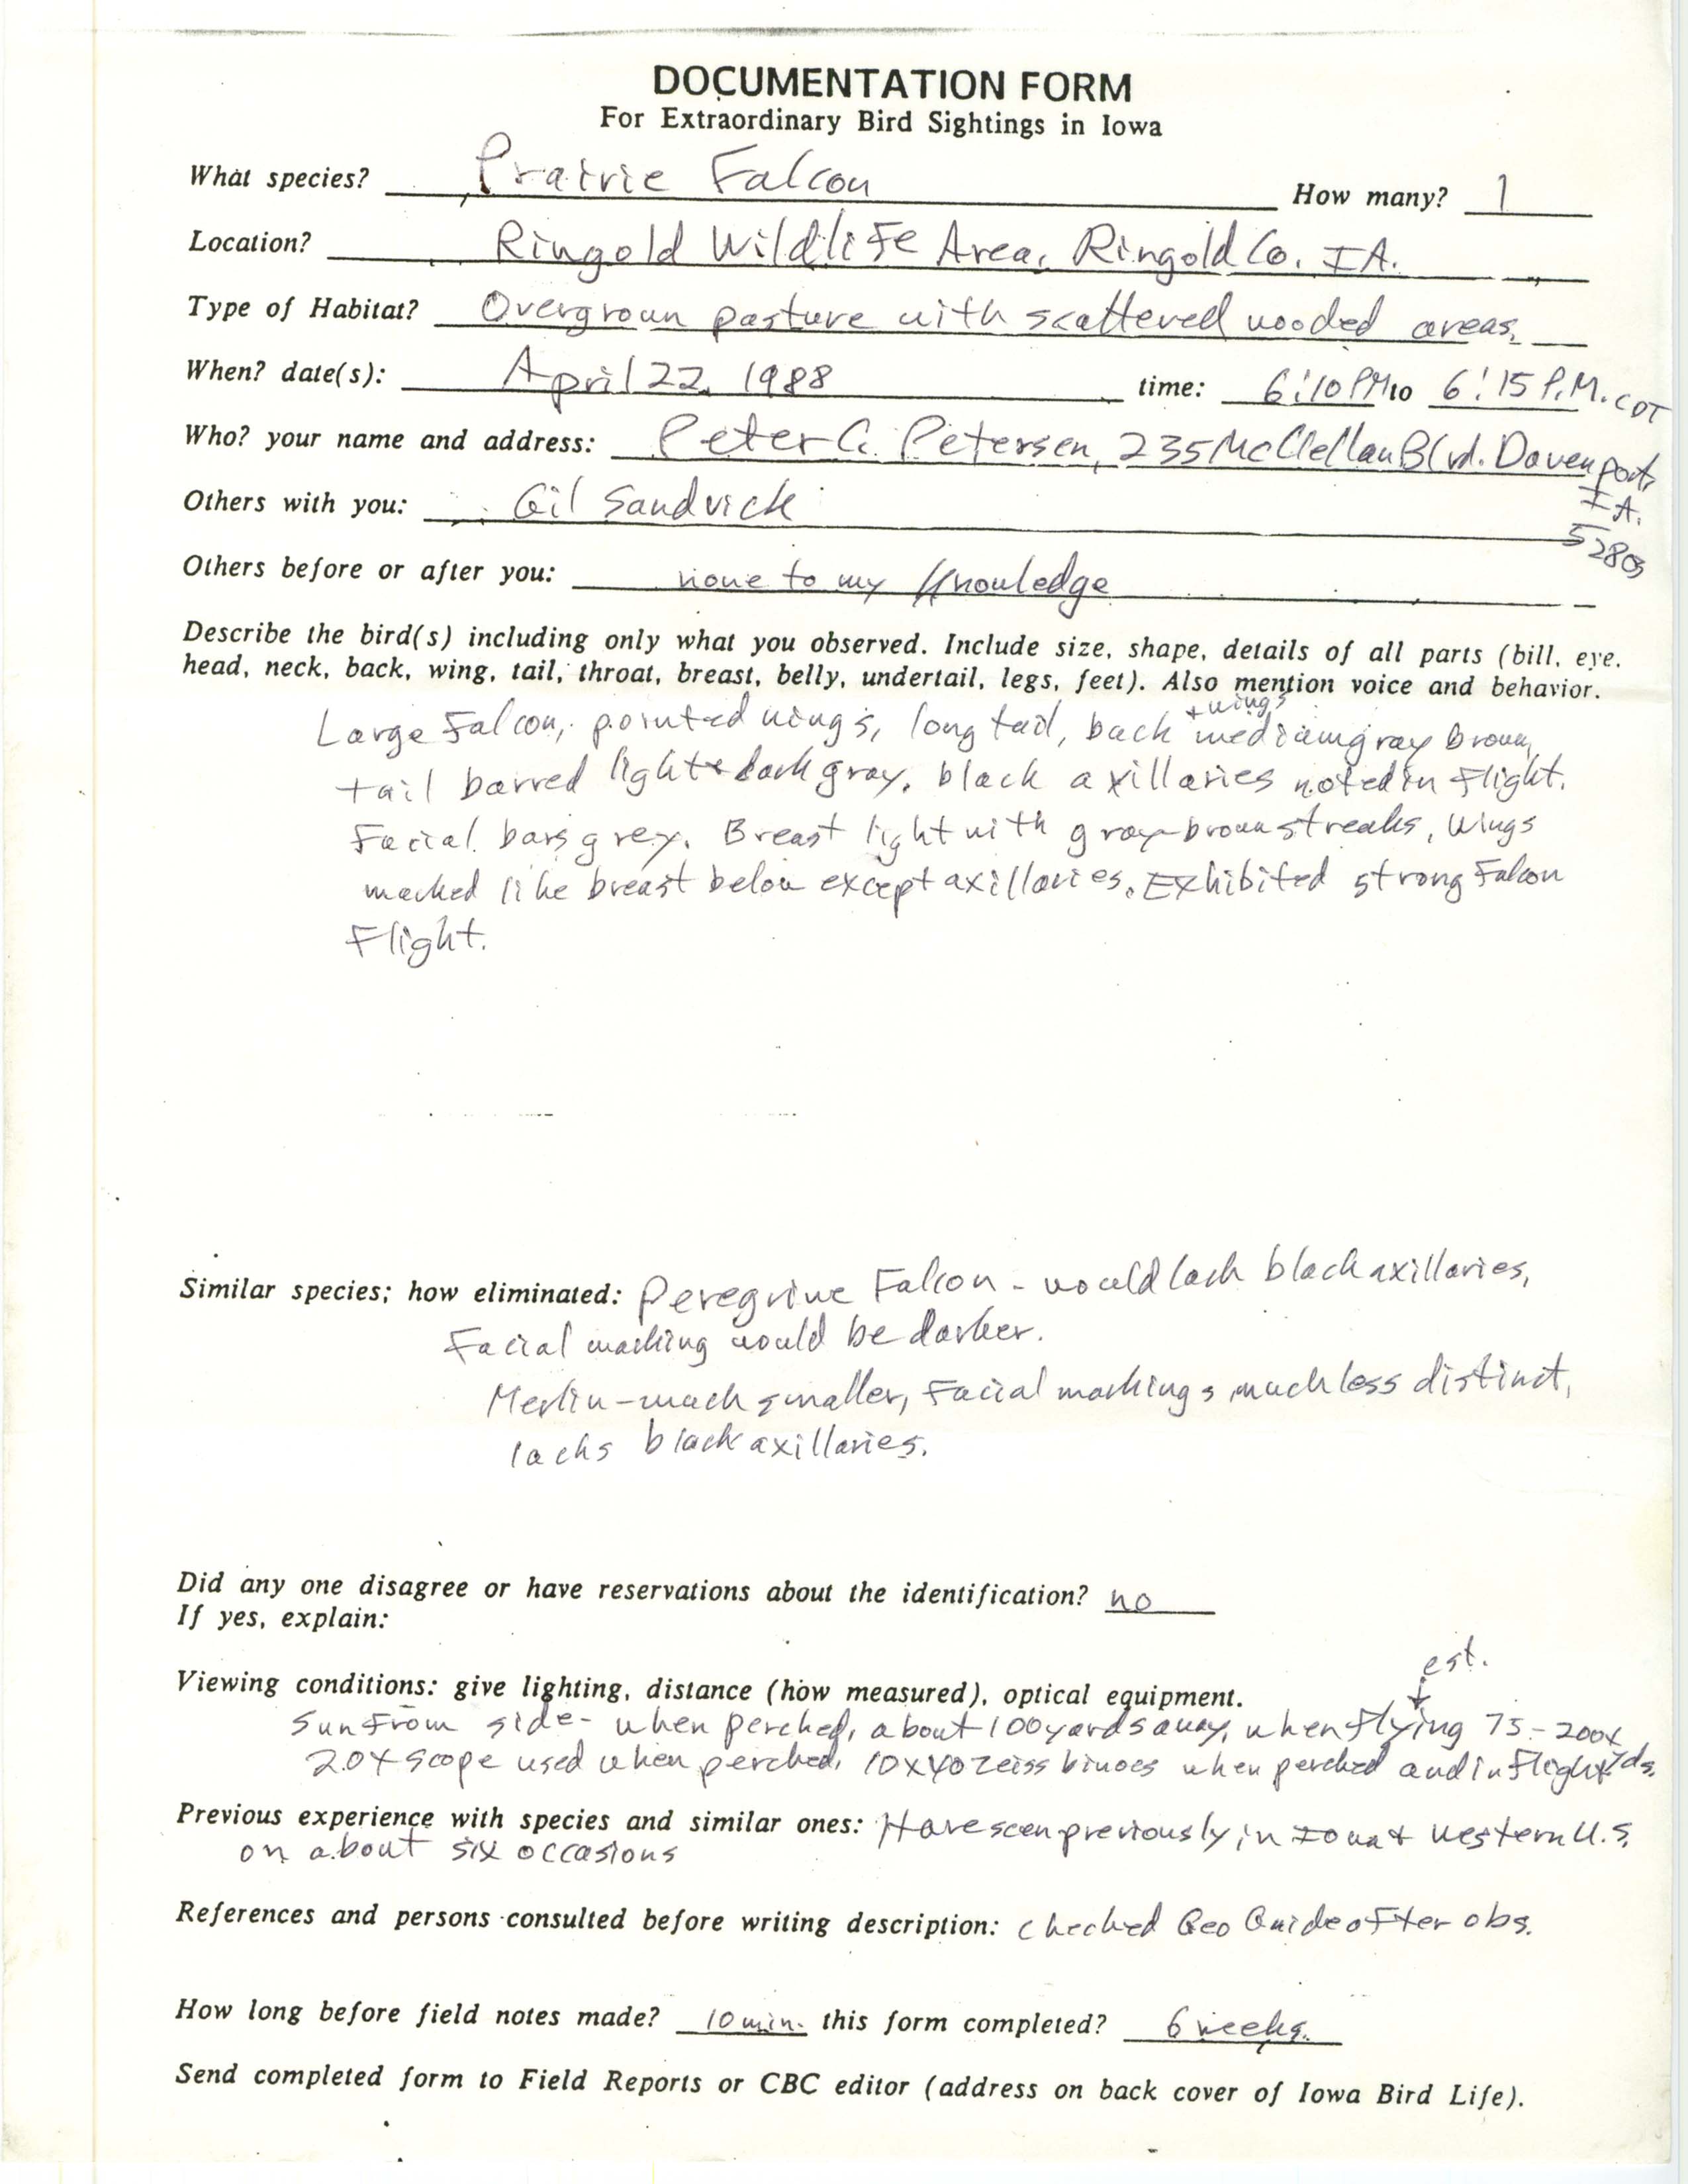 Rare bird documentation form for Prairie Falcon at Ringgold Wildlife Area, 1988